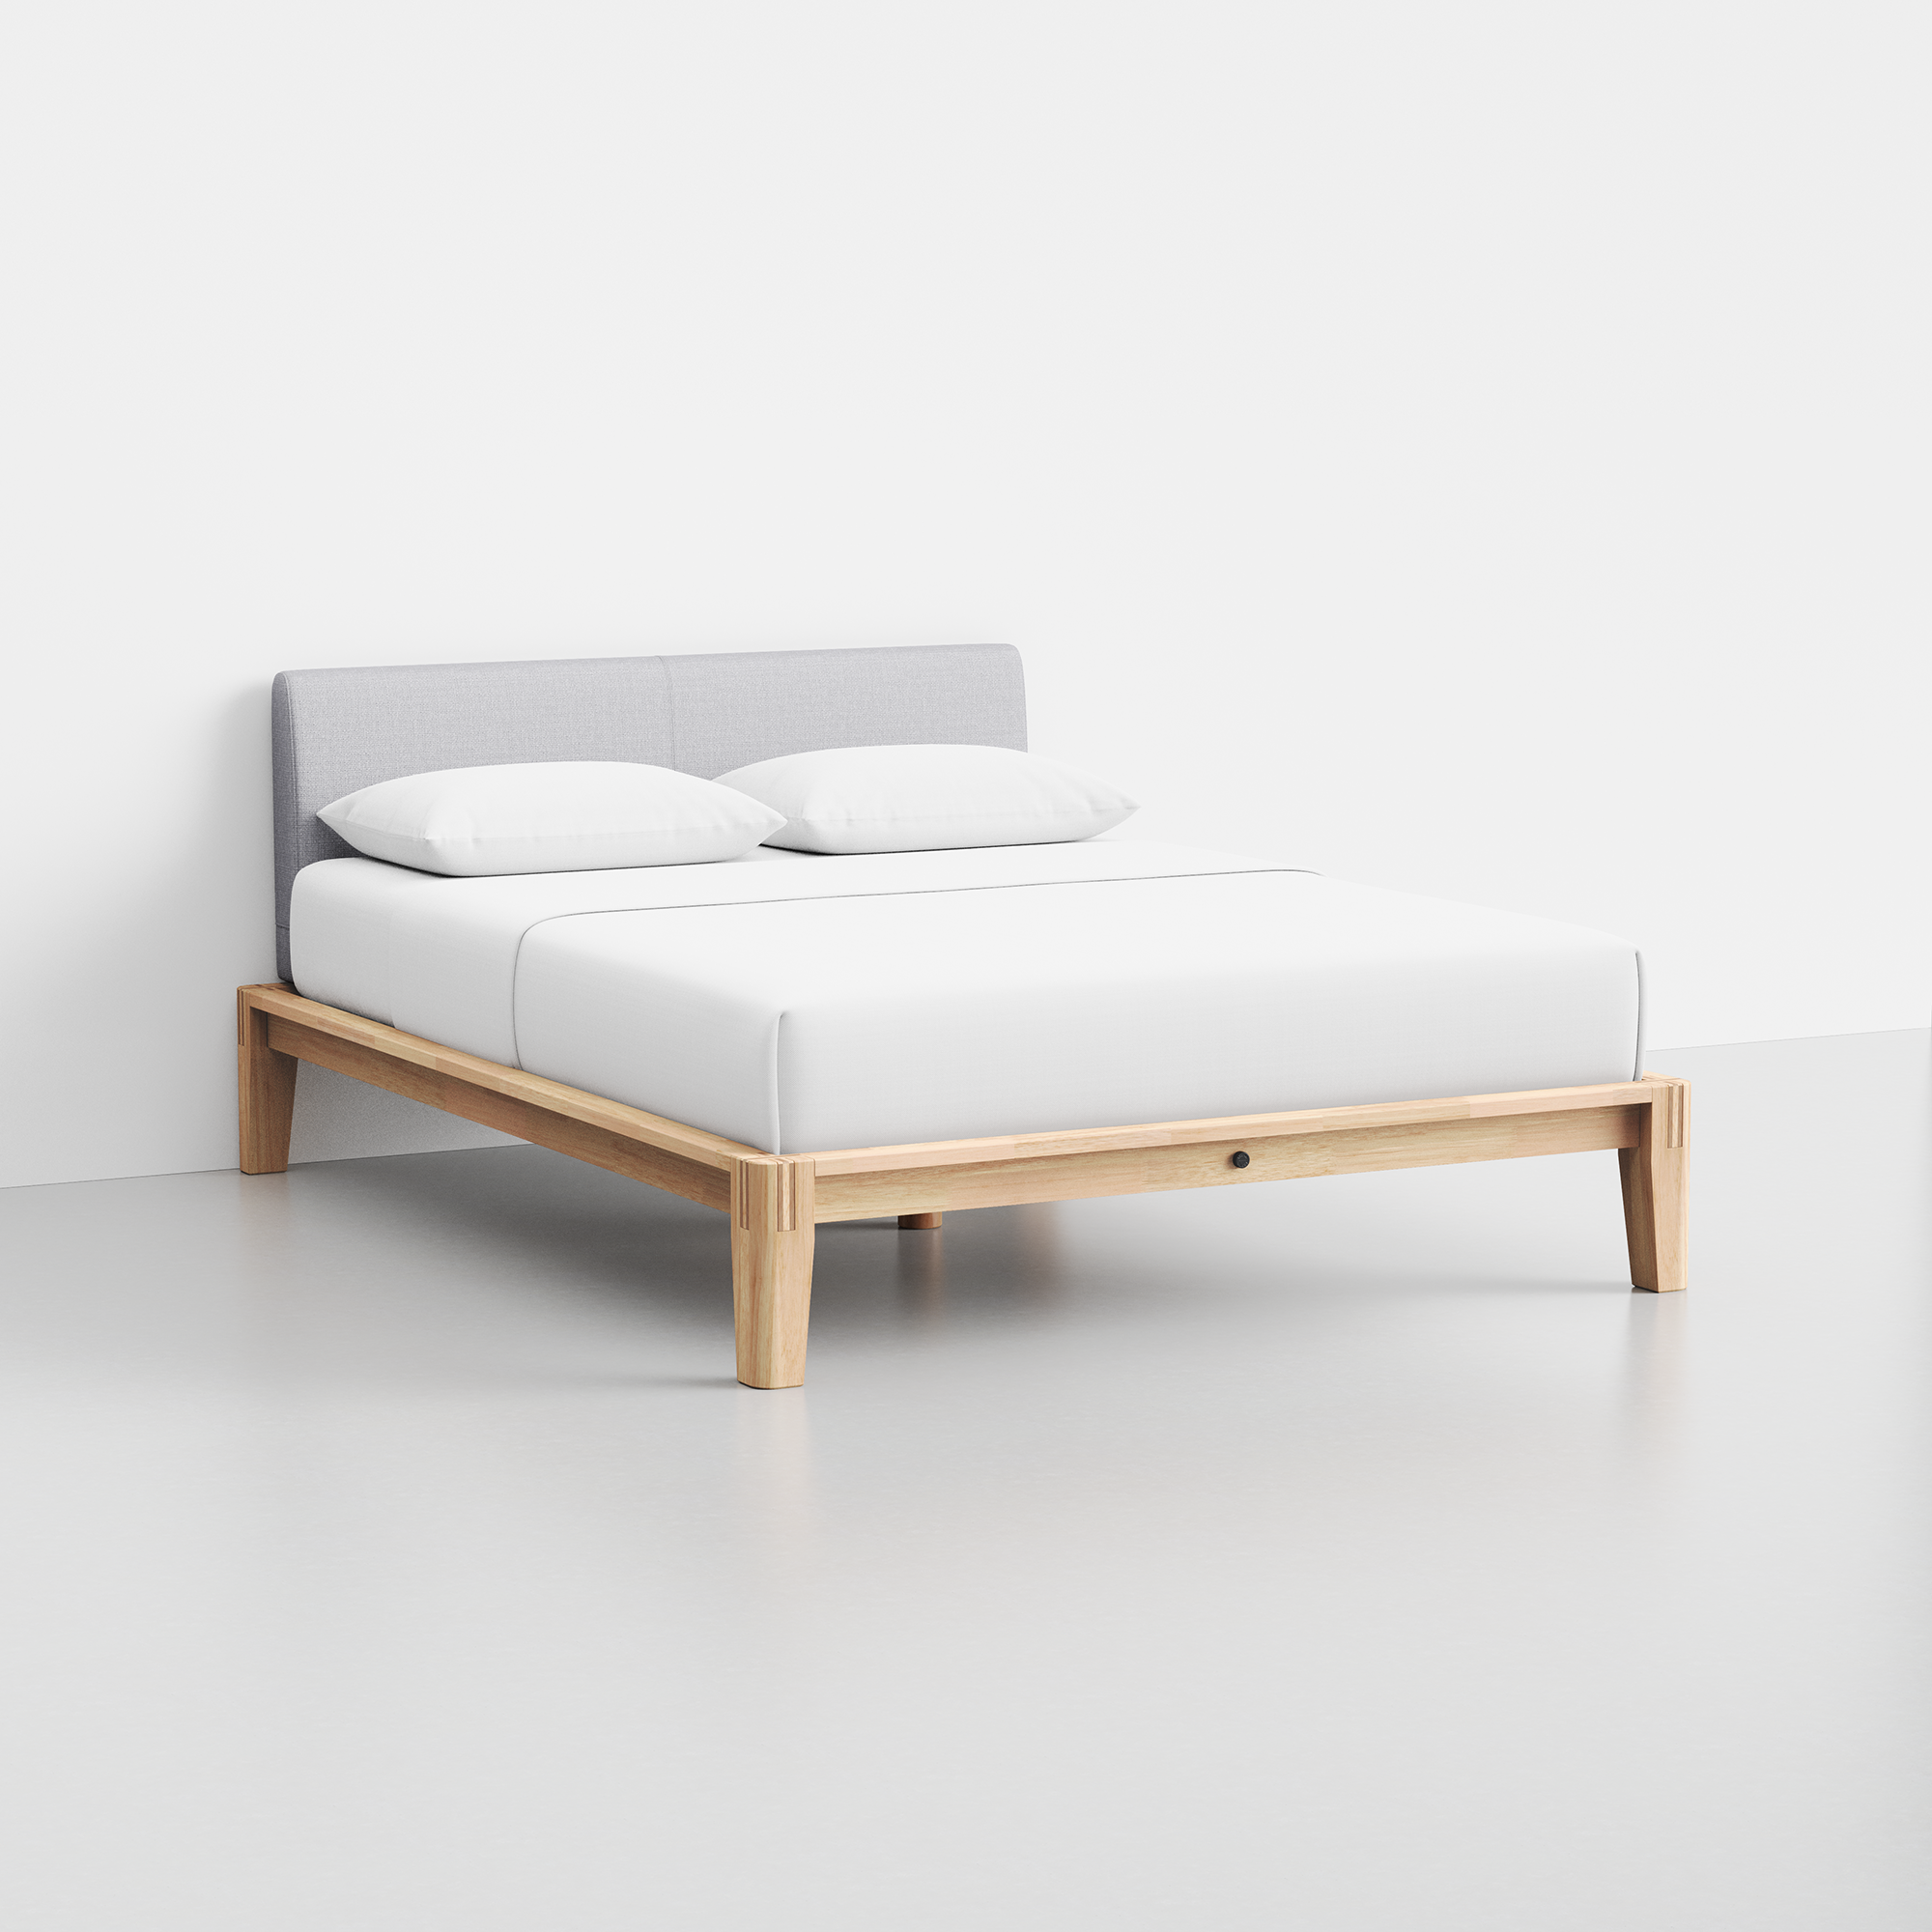 The Bed (Natural / Fog Grey) - Render - Angled